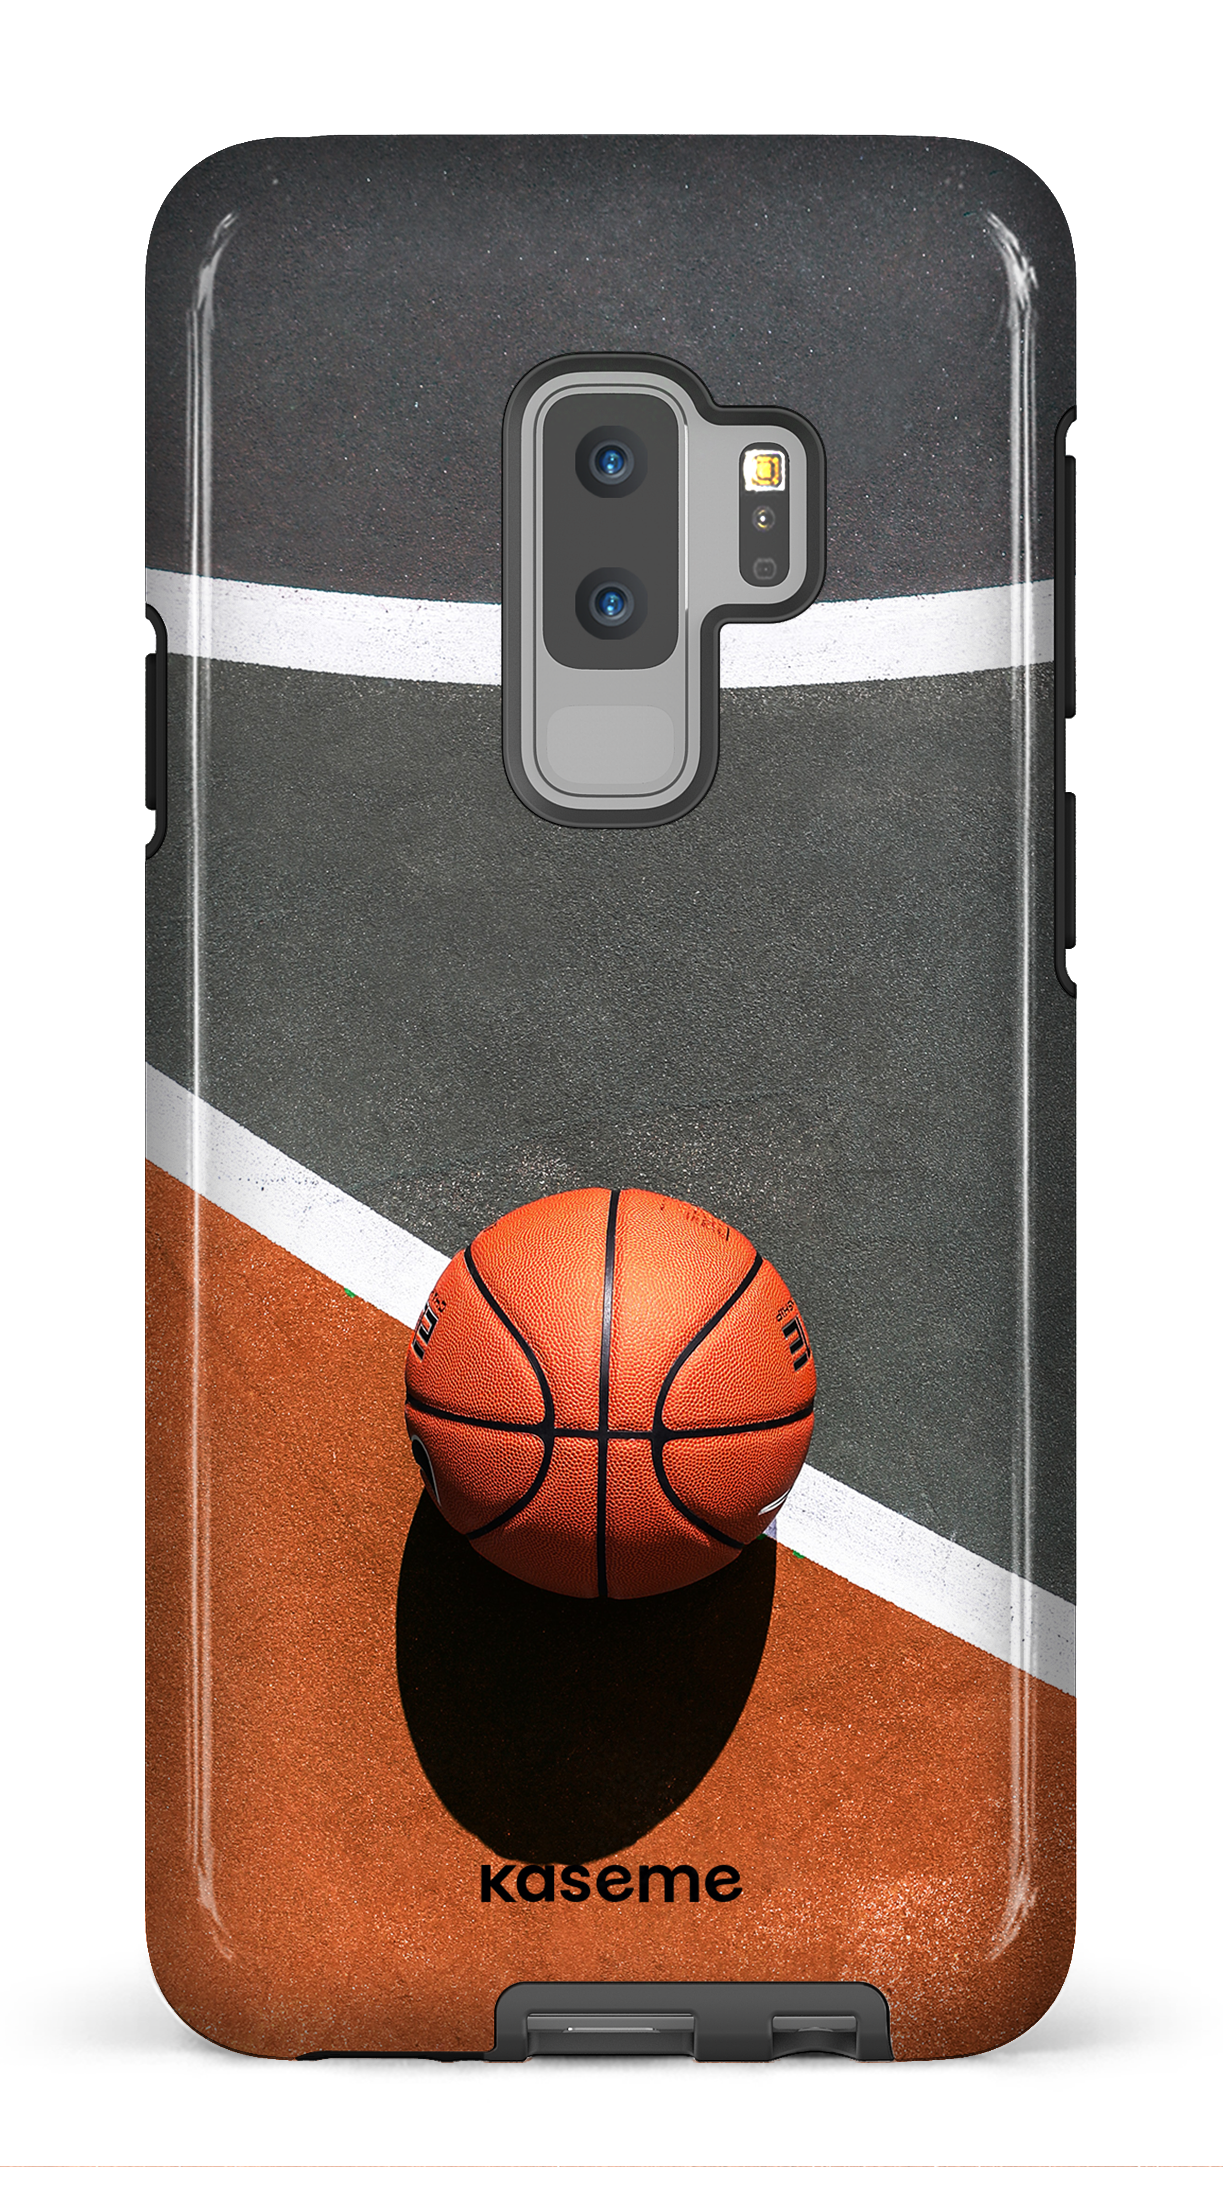 Baller - Galaxy S9 Plus